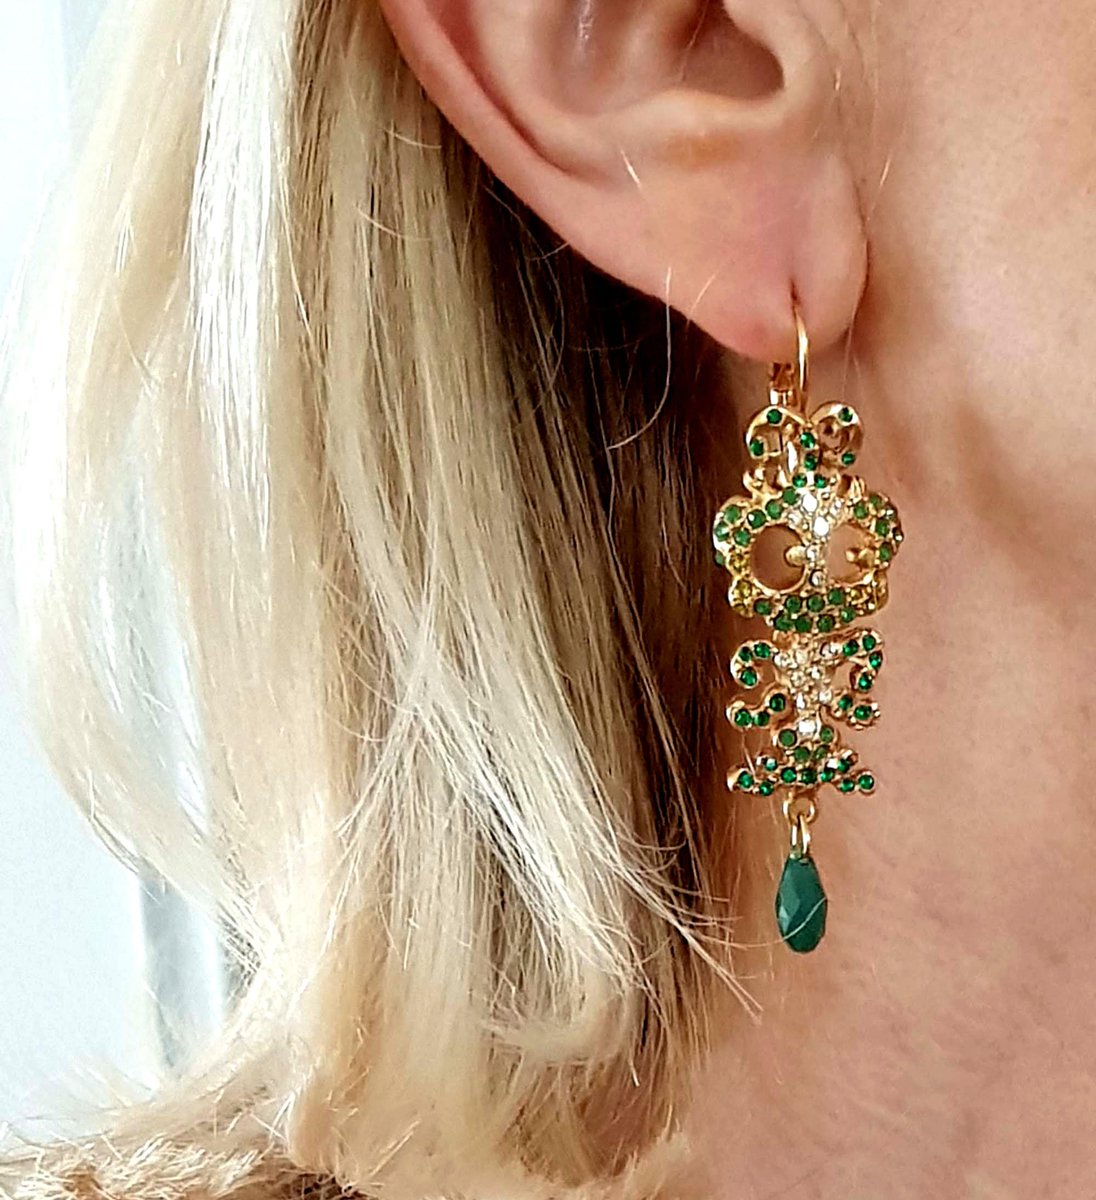 CHRISTIAN LACROIX , original pair of Ear Pendants for pierced ears, #PiercedEars #earrings 
€620.00
➤ etsy.com/listing/125395…